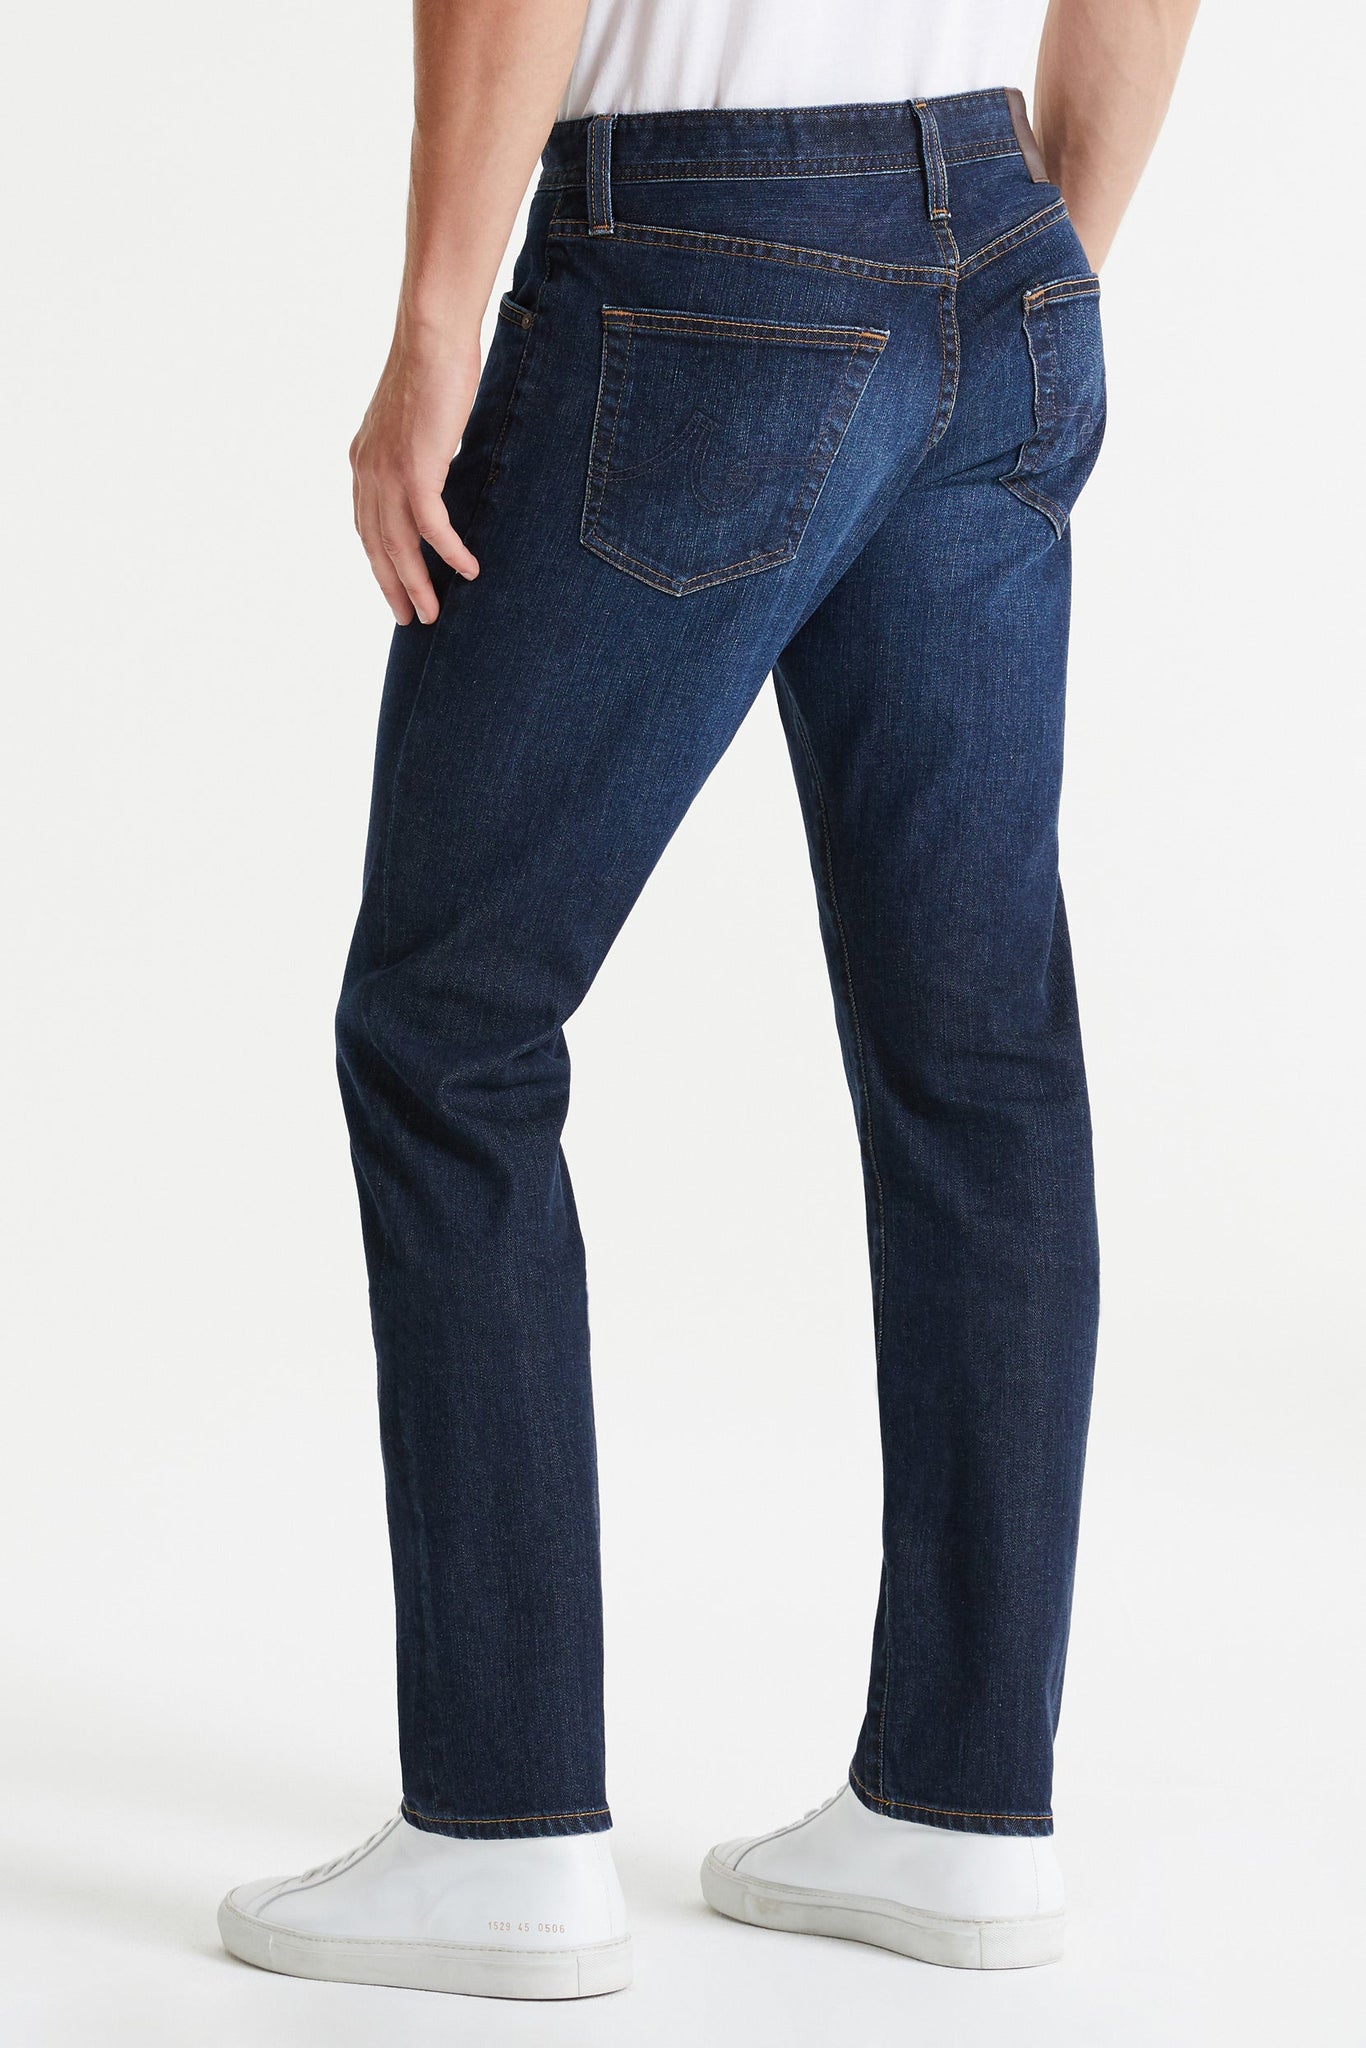 Everett Jeans - Series